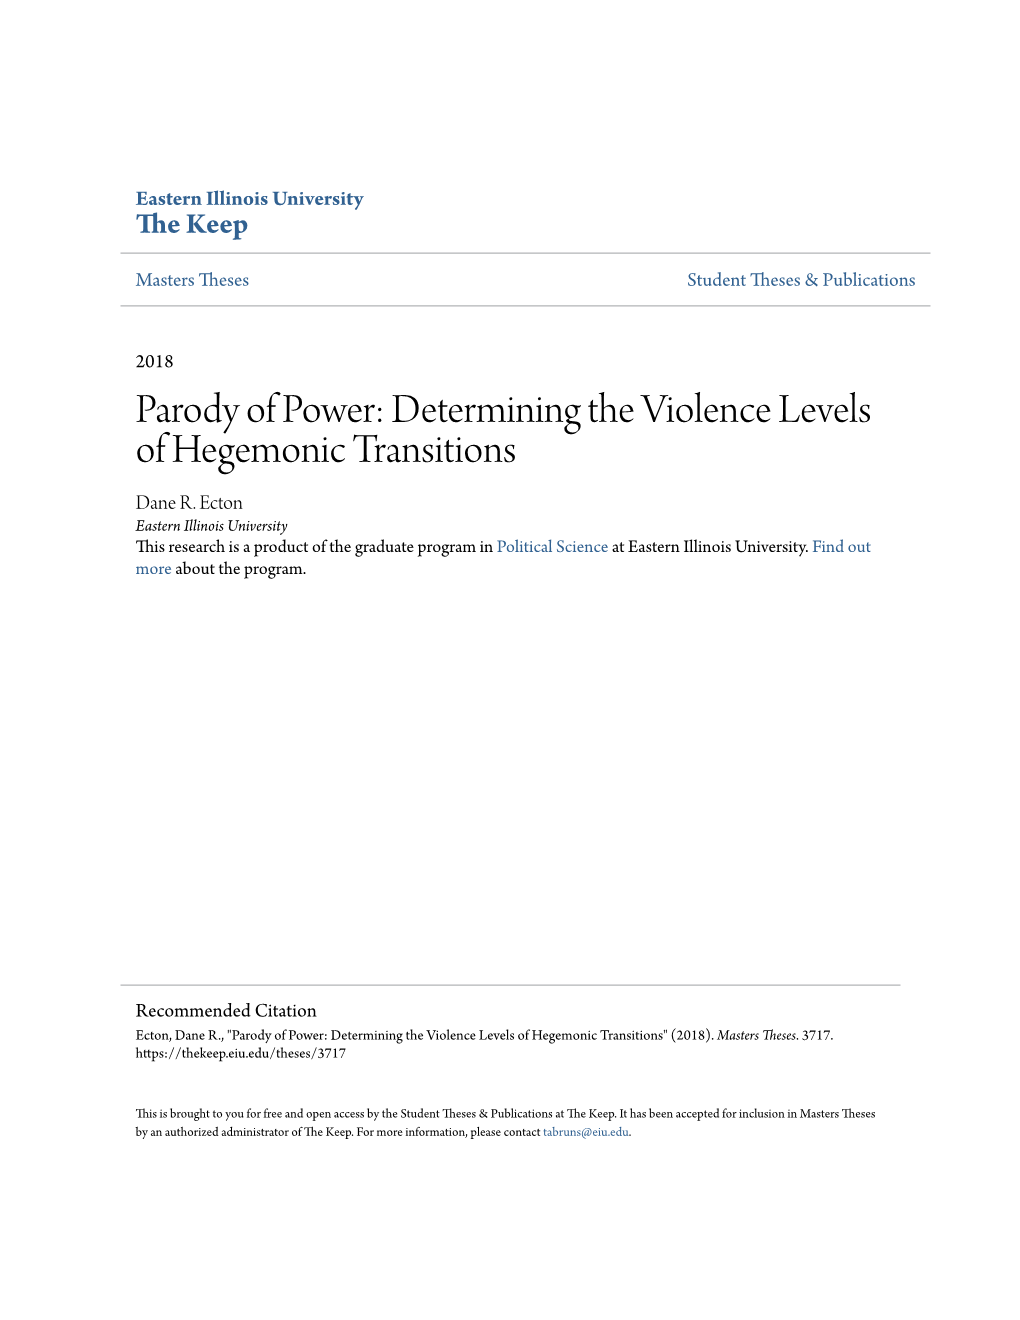 Determining the Violence Levels of Hegemonic Transitions Dane R